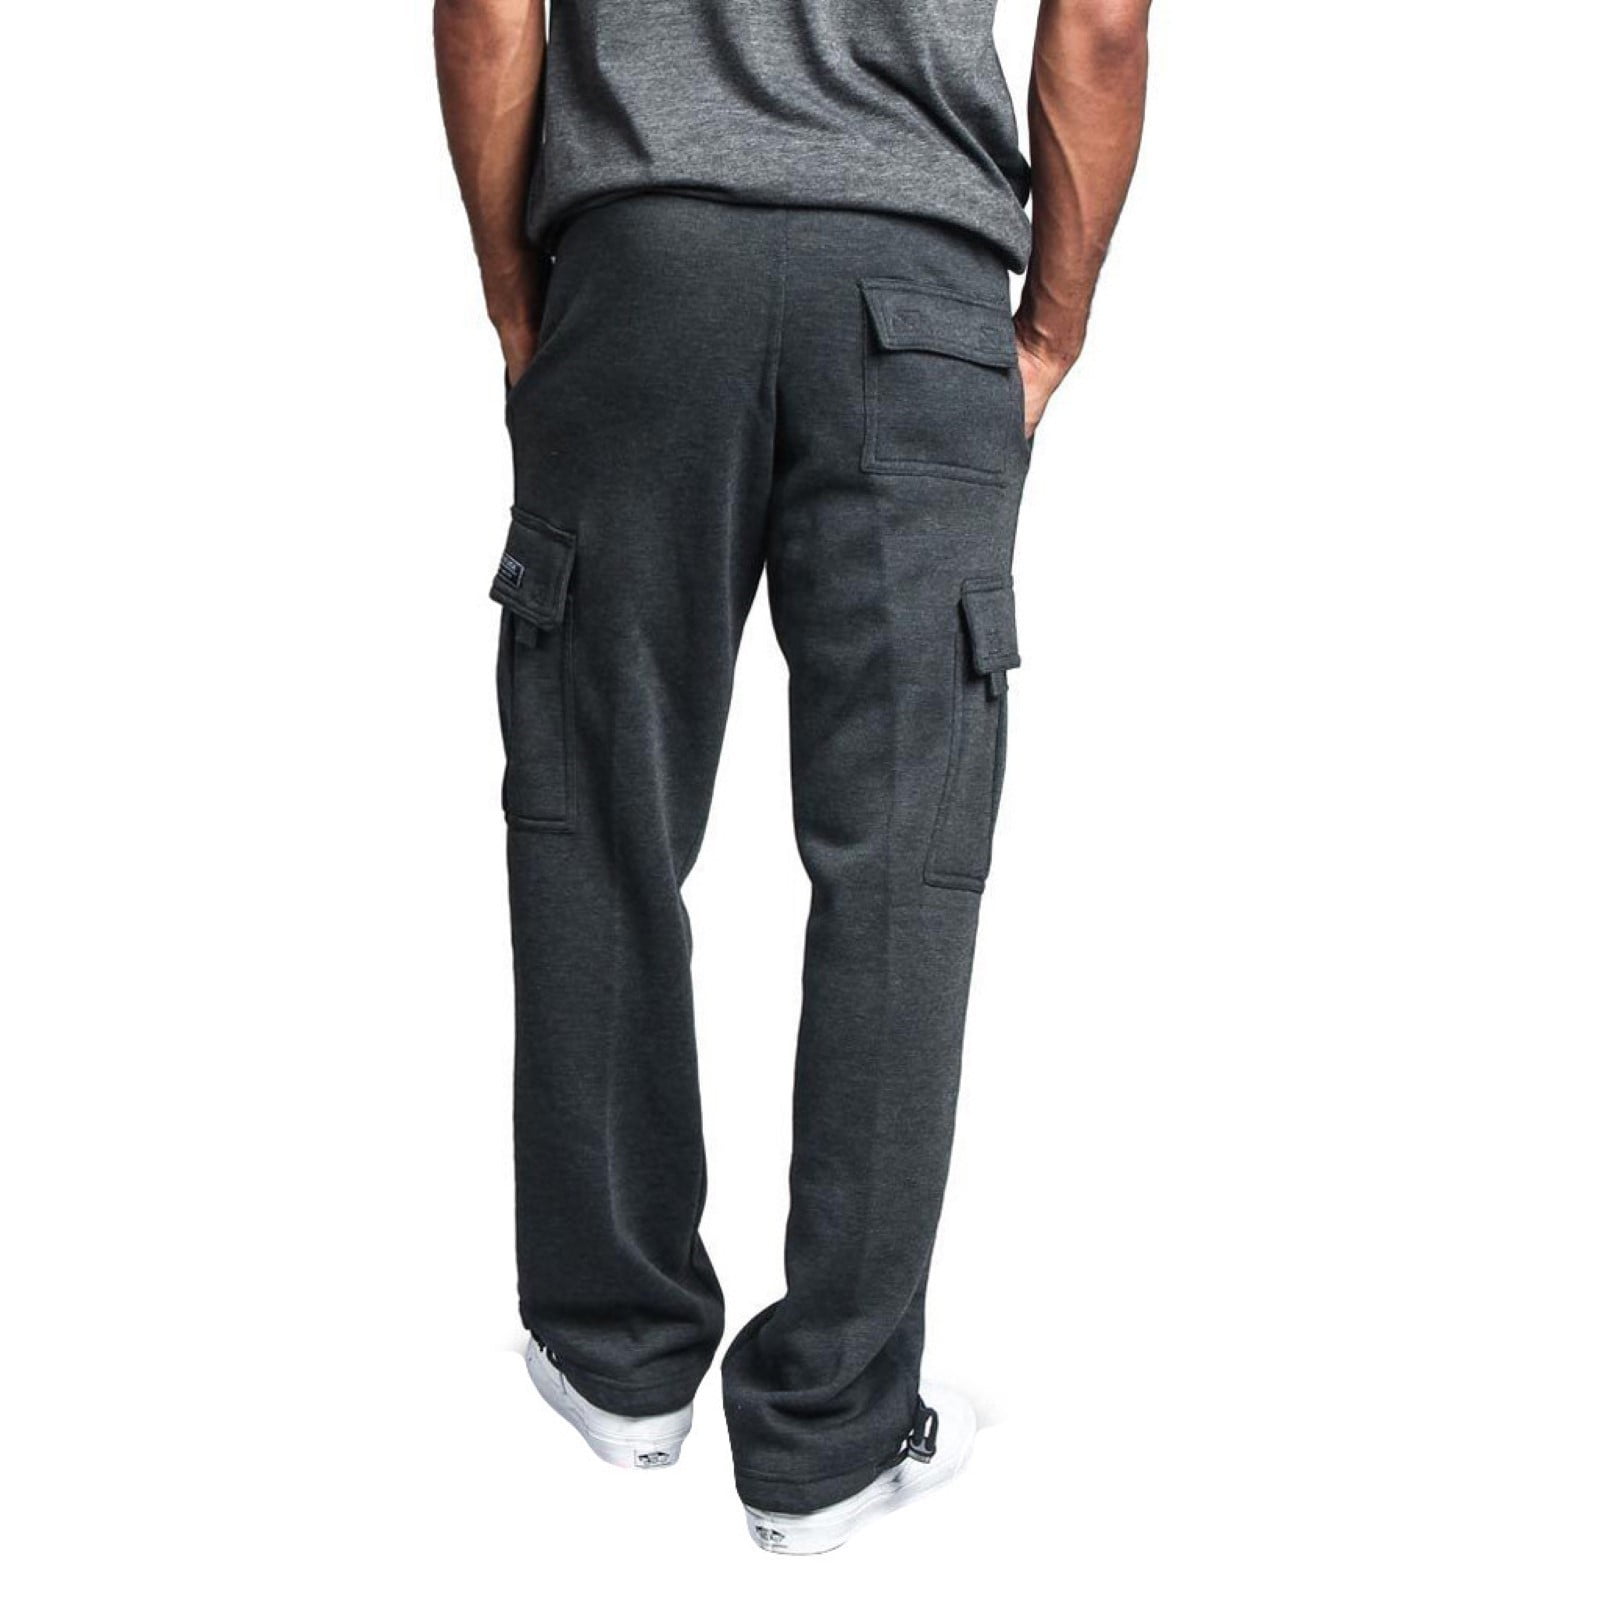 Aayomet Sweat Pants For Man Men's Basic Active Jogger Pants-Regular and Big  & Tall Sizes,Navy 4XL 